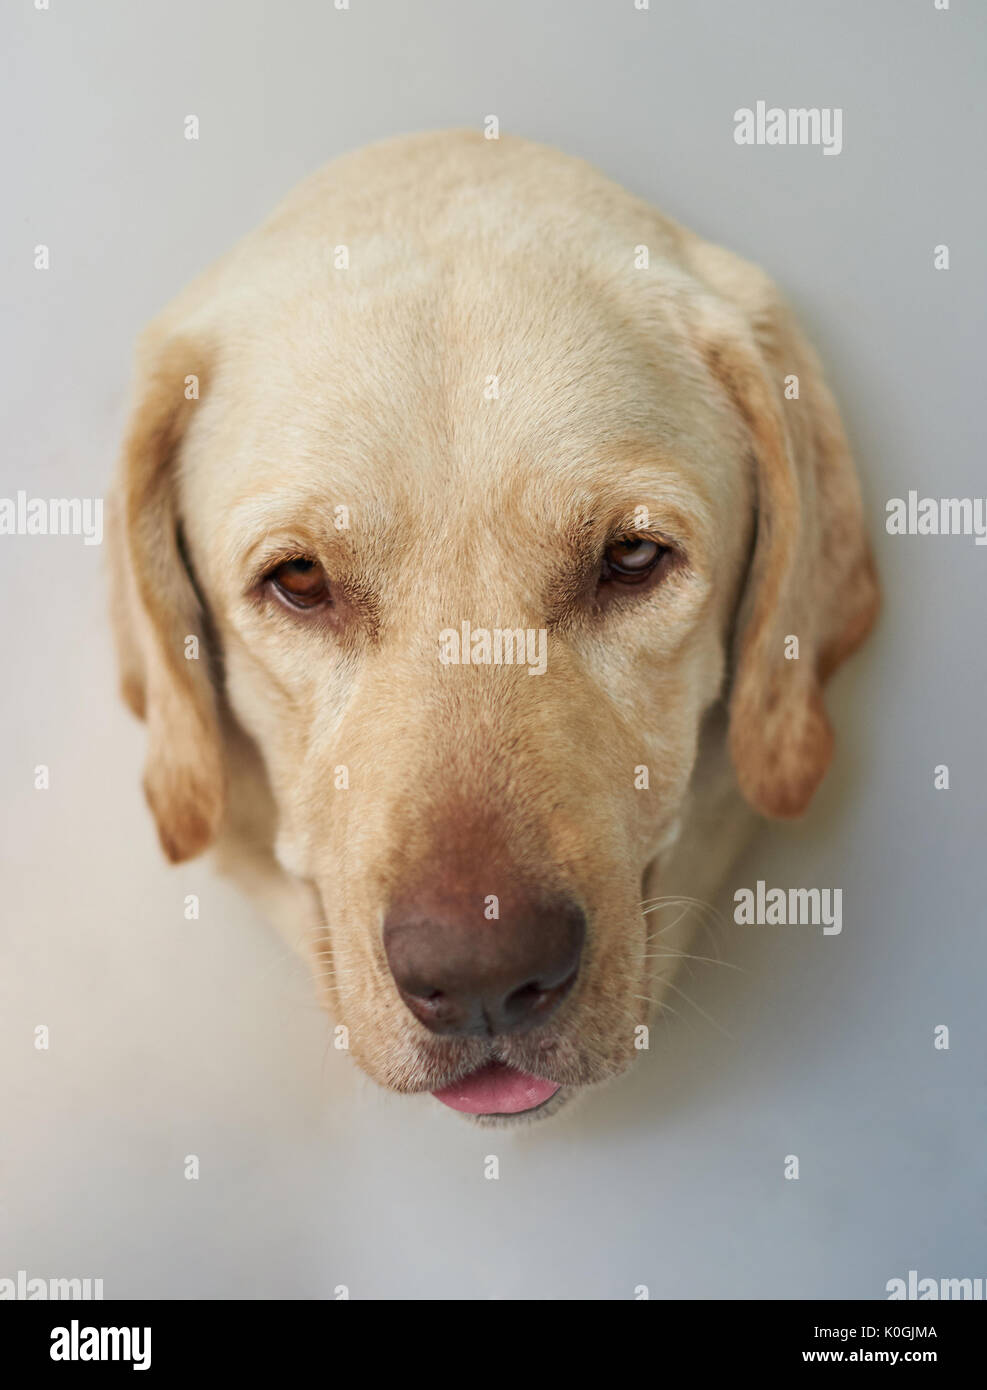 Head of labrador dog on white background Stock Photo